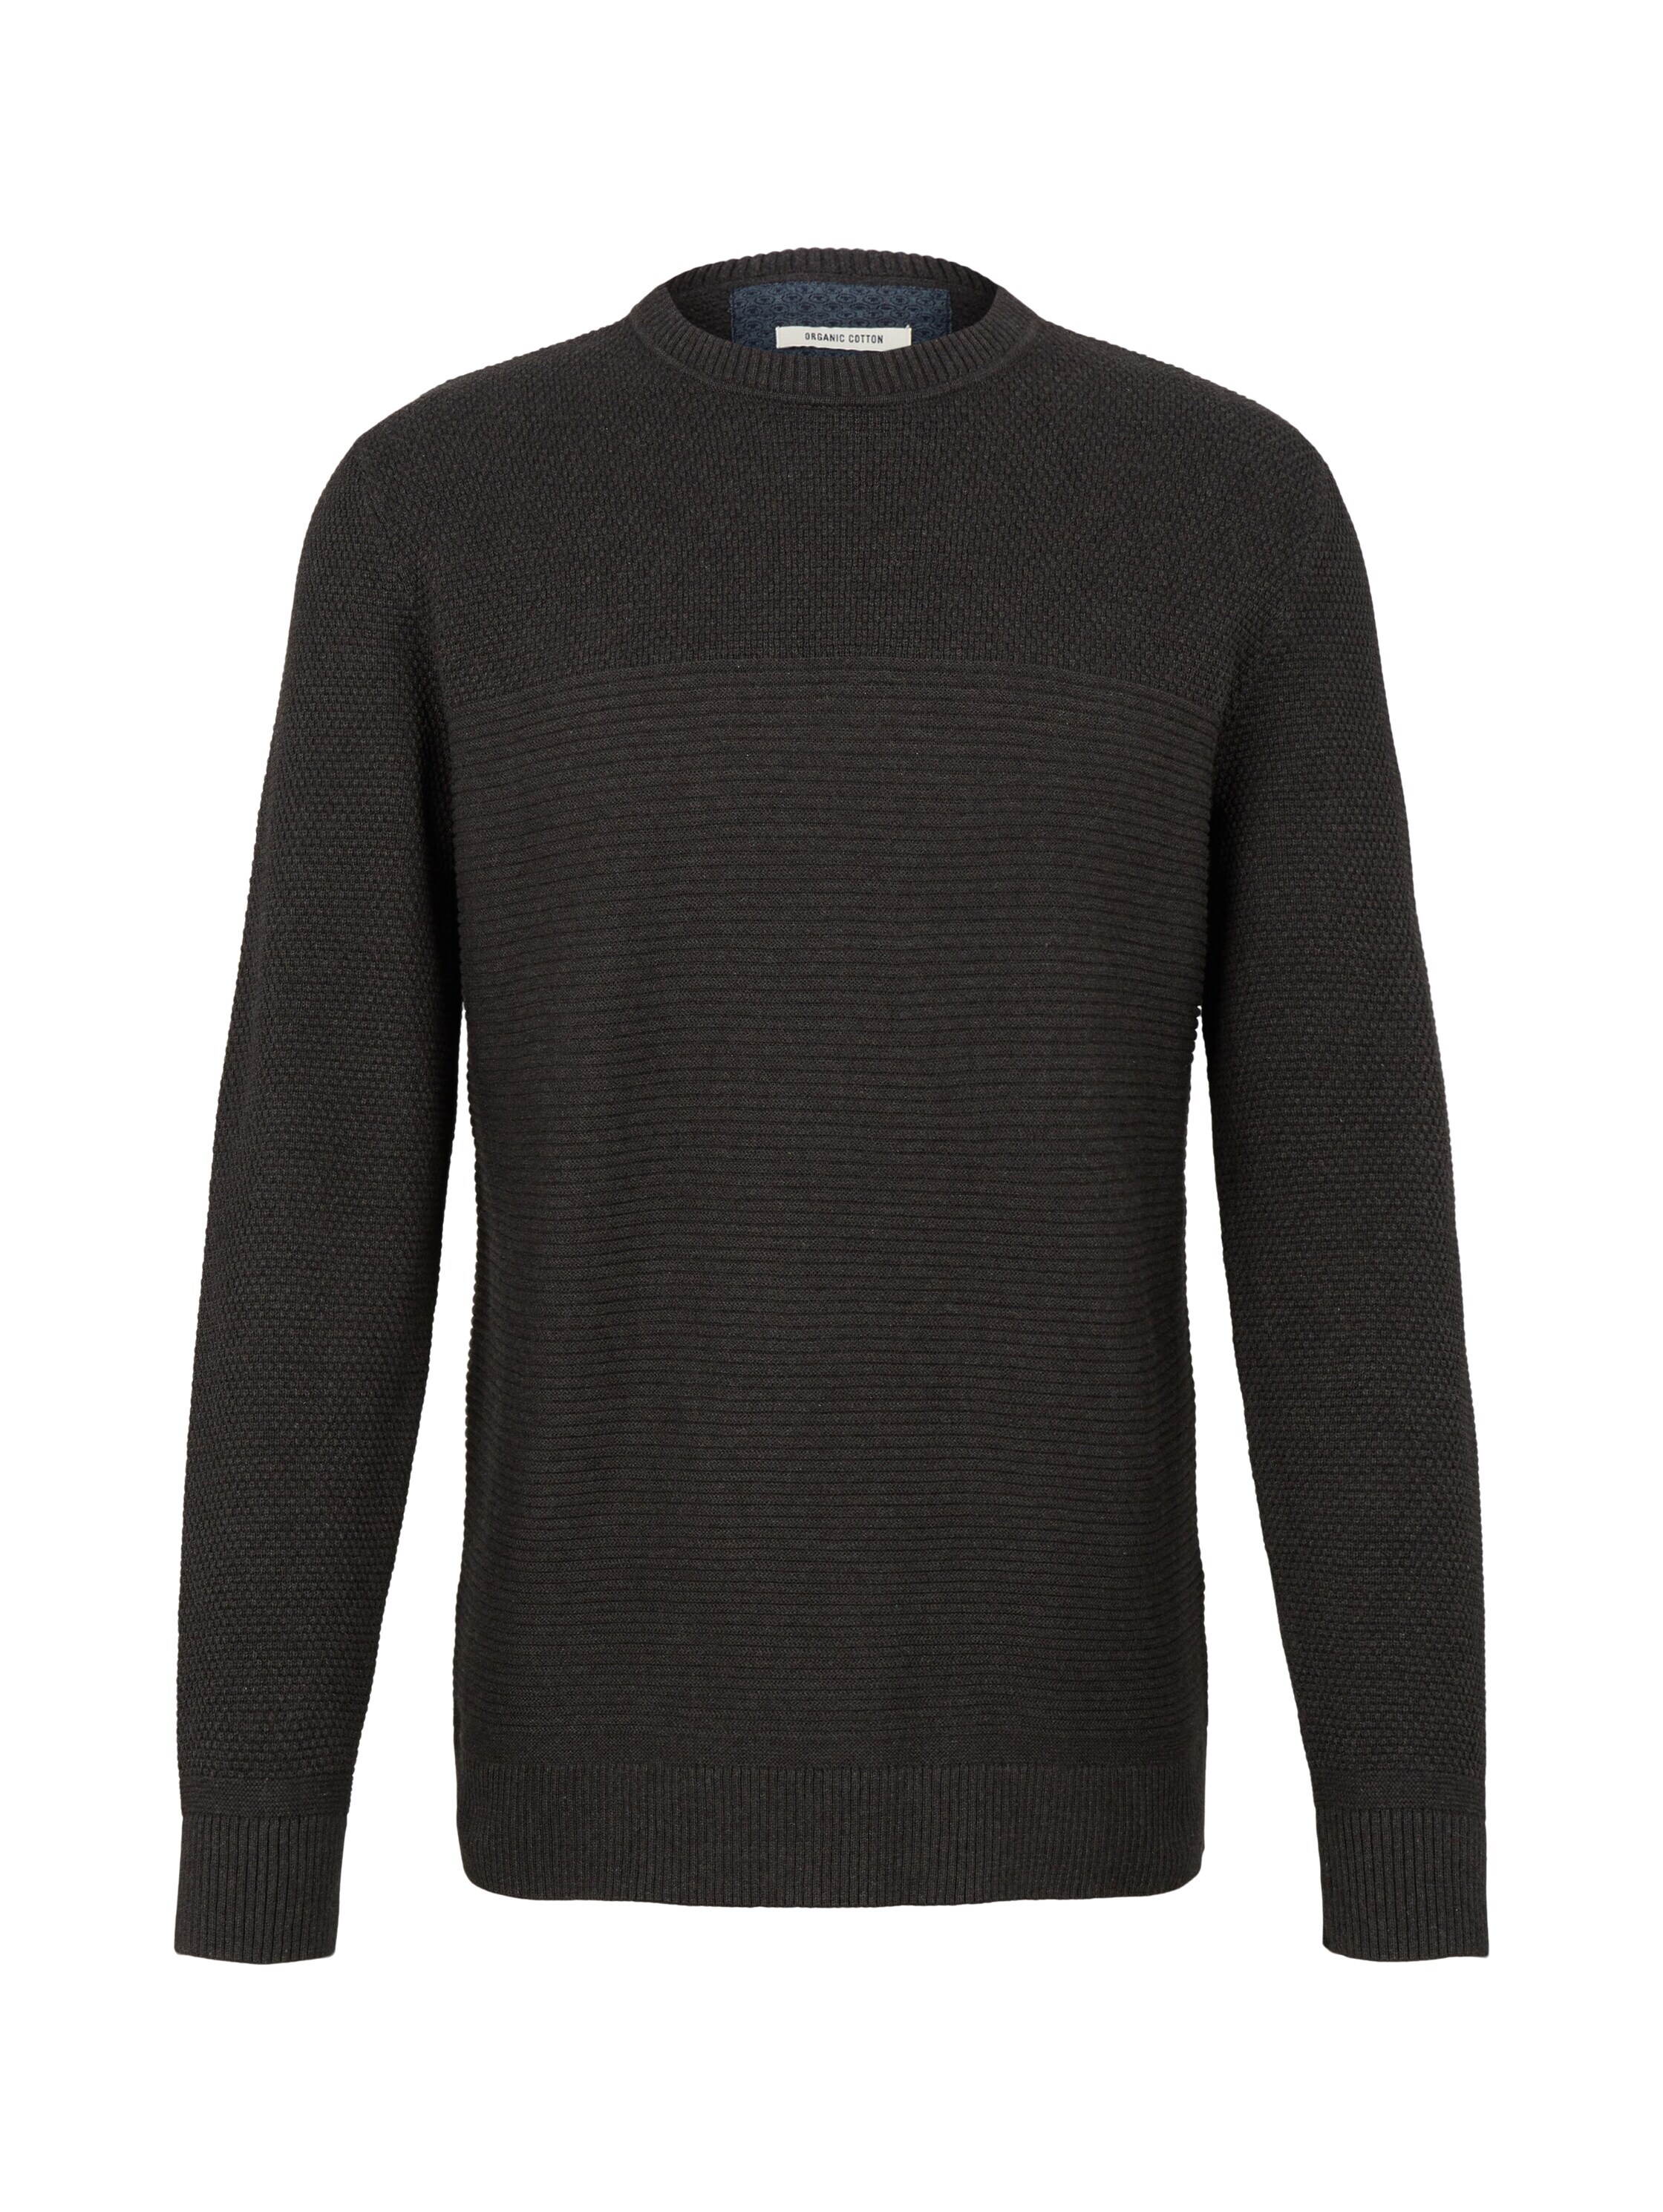 Пуловер Tom Tailor, серый пуловер tom tailor размер l серый